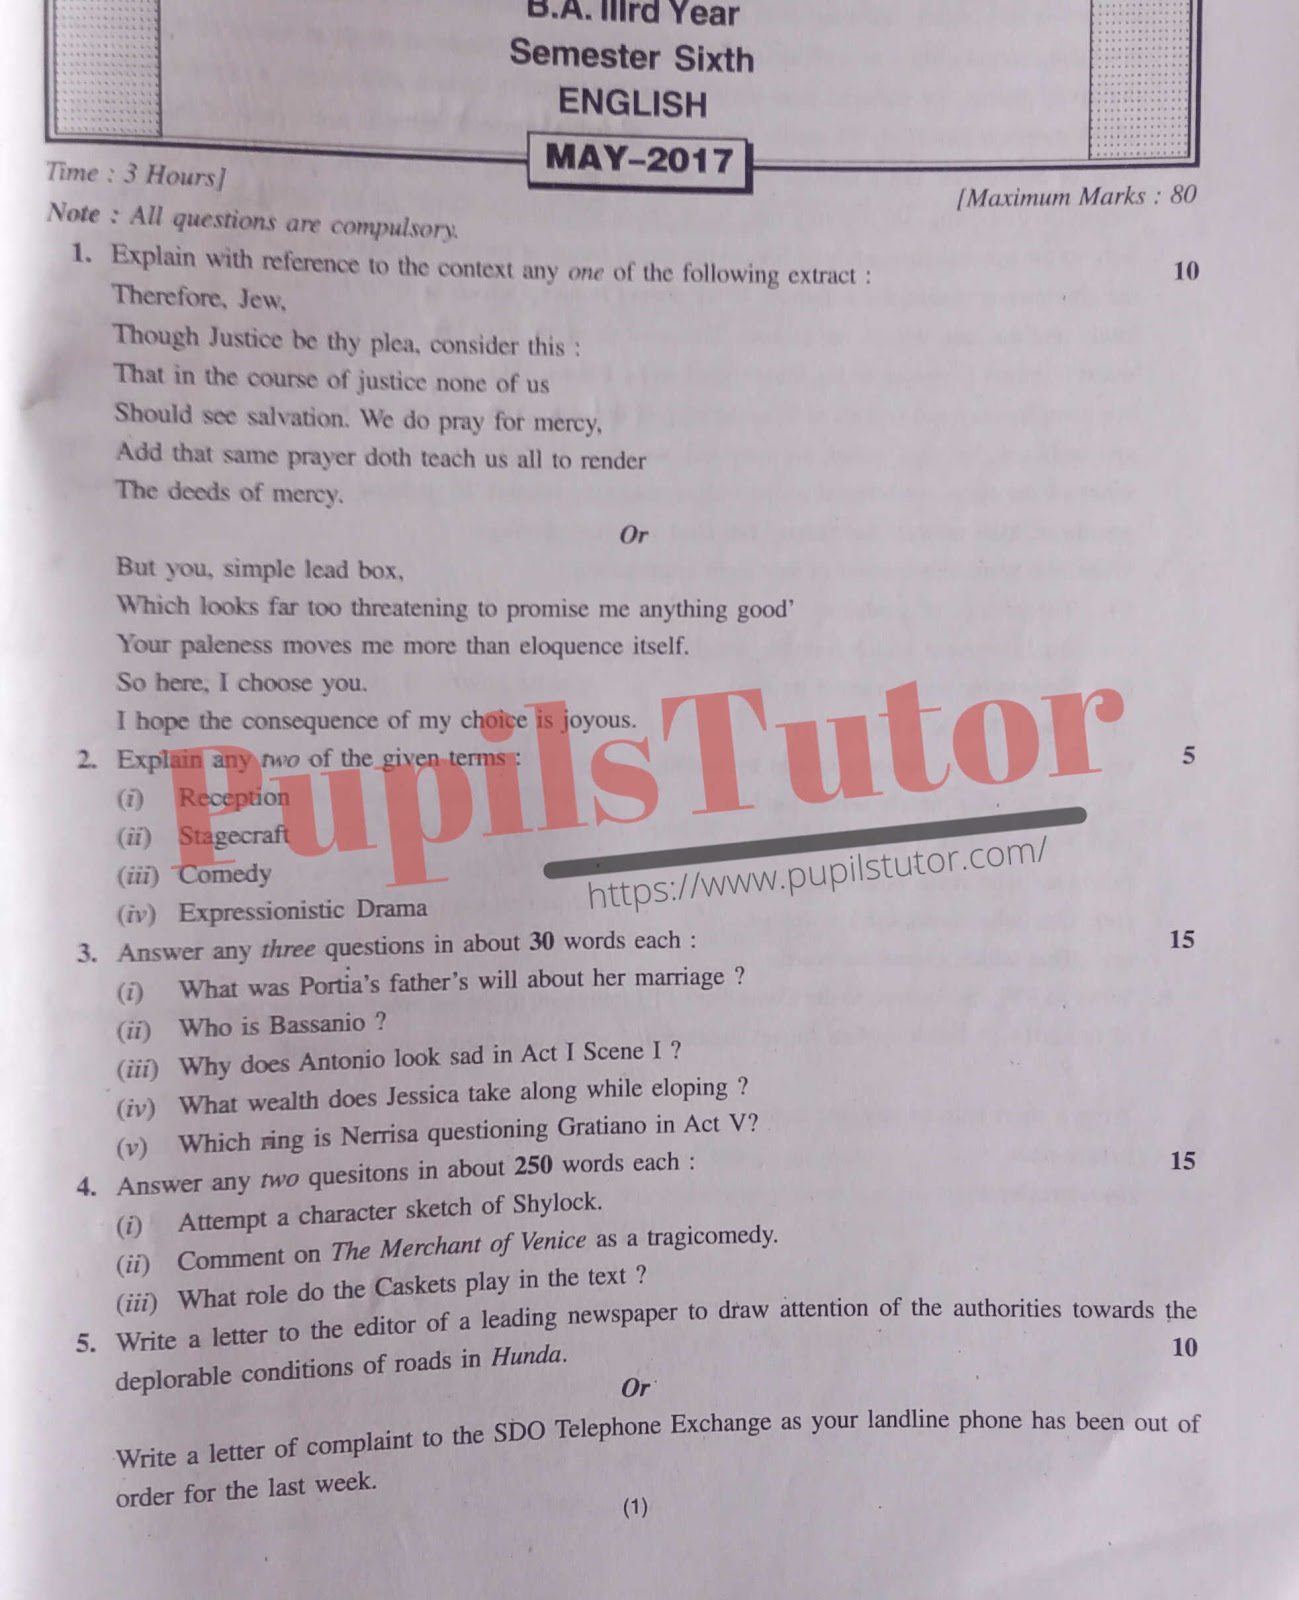 KUK (Kurukshetra University, Kurukshetra Haryana) BA Semester Exam Sixth Semester Previous Year English Question Paper For May, 2017 Exam (Question Paper Page 1) - pupilstutor.com